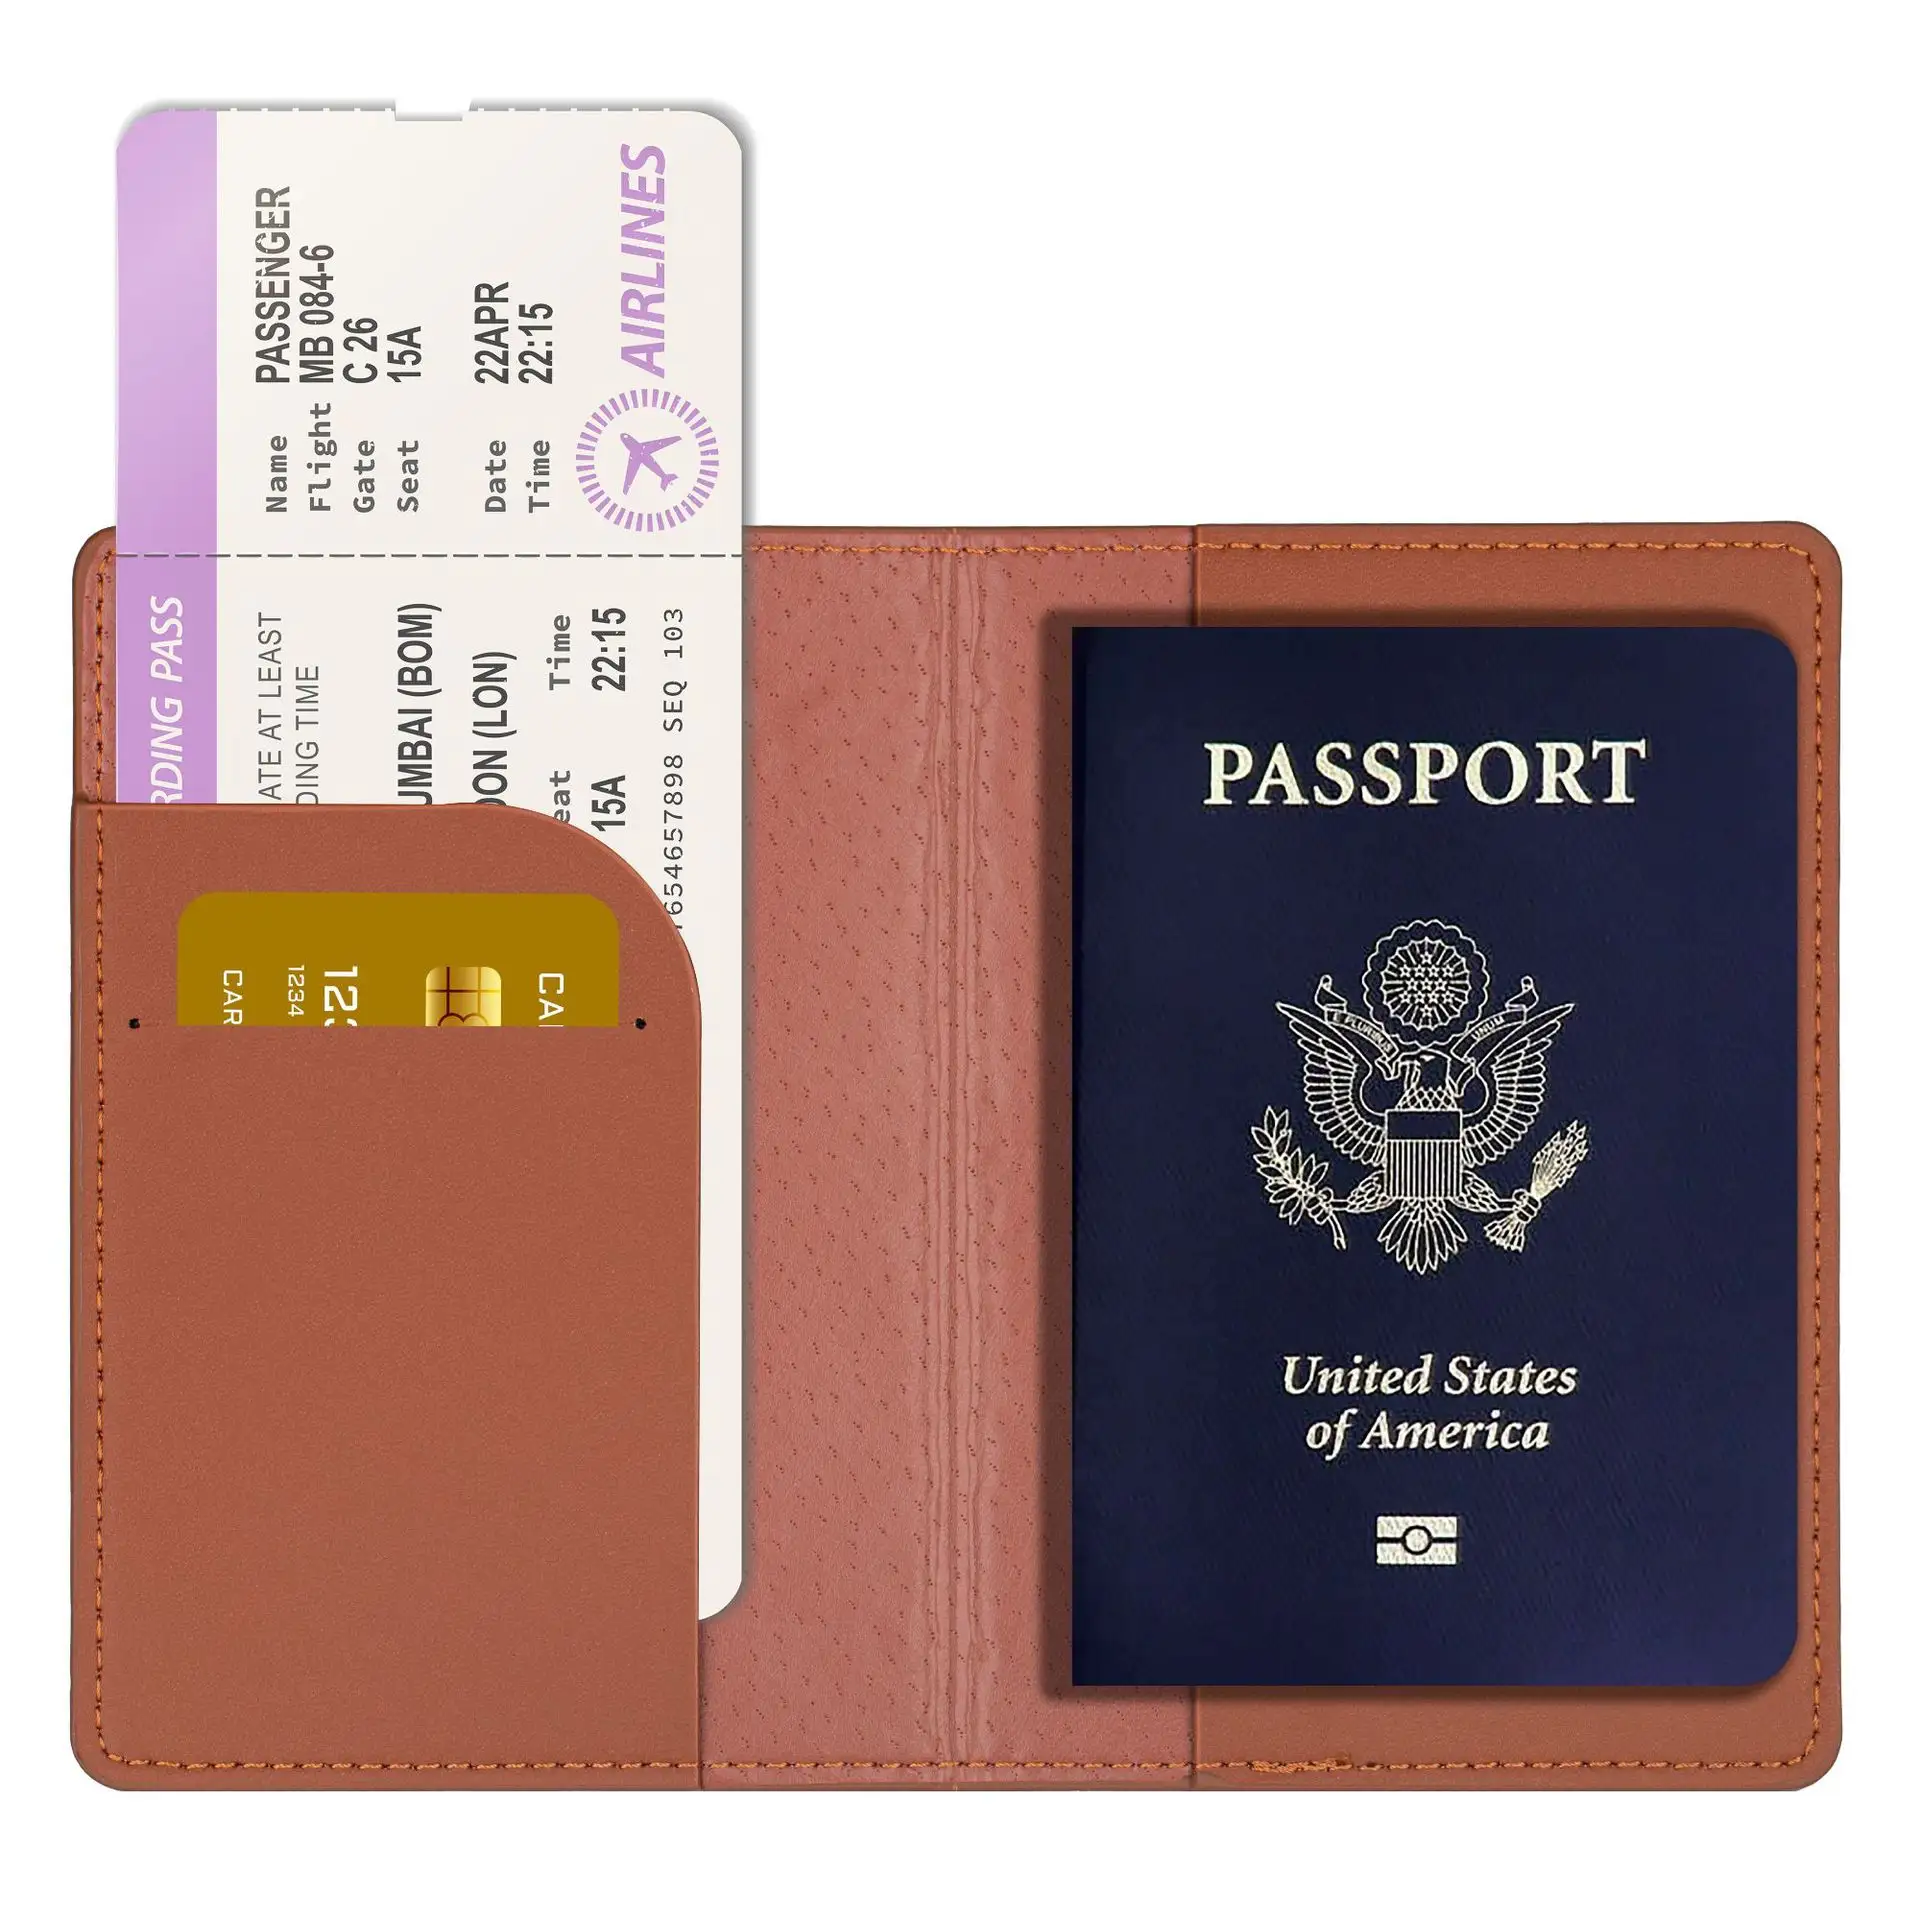 PU leather passport case Passport bag card holder